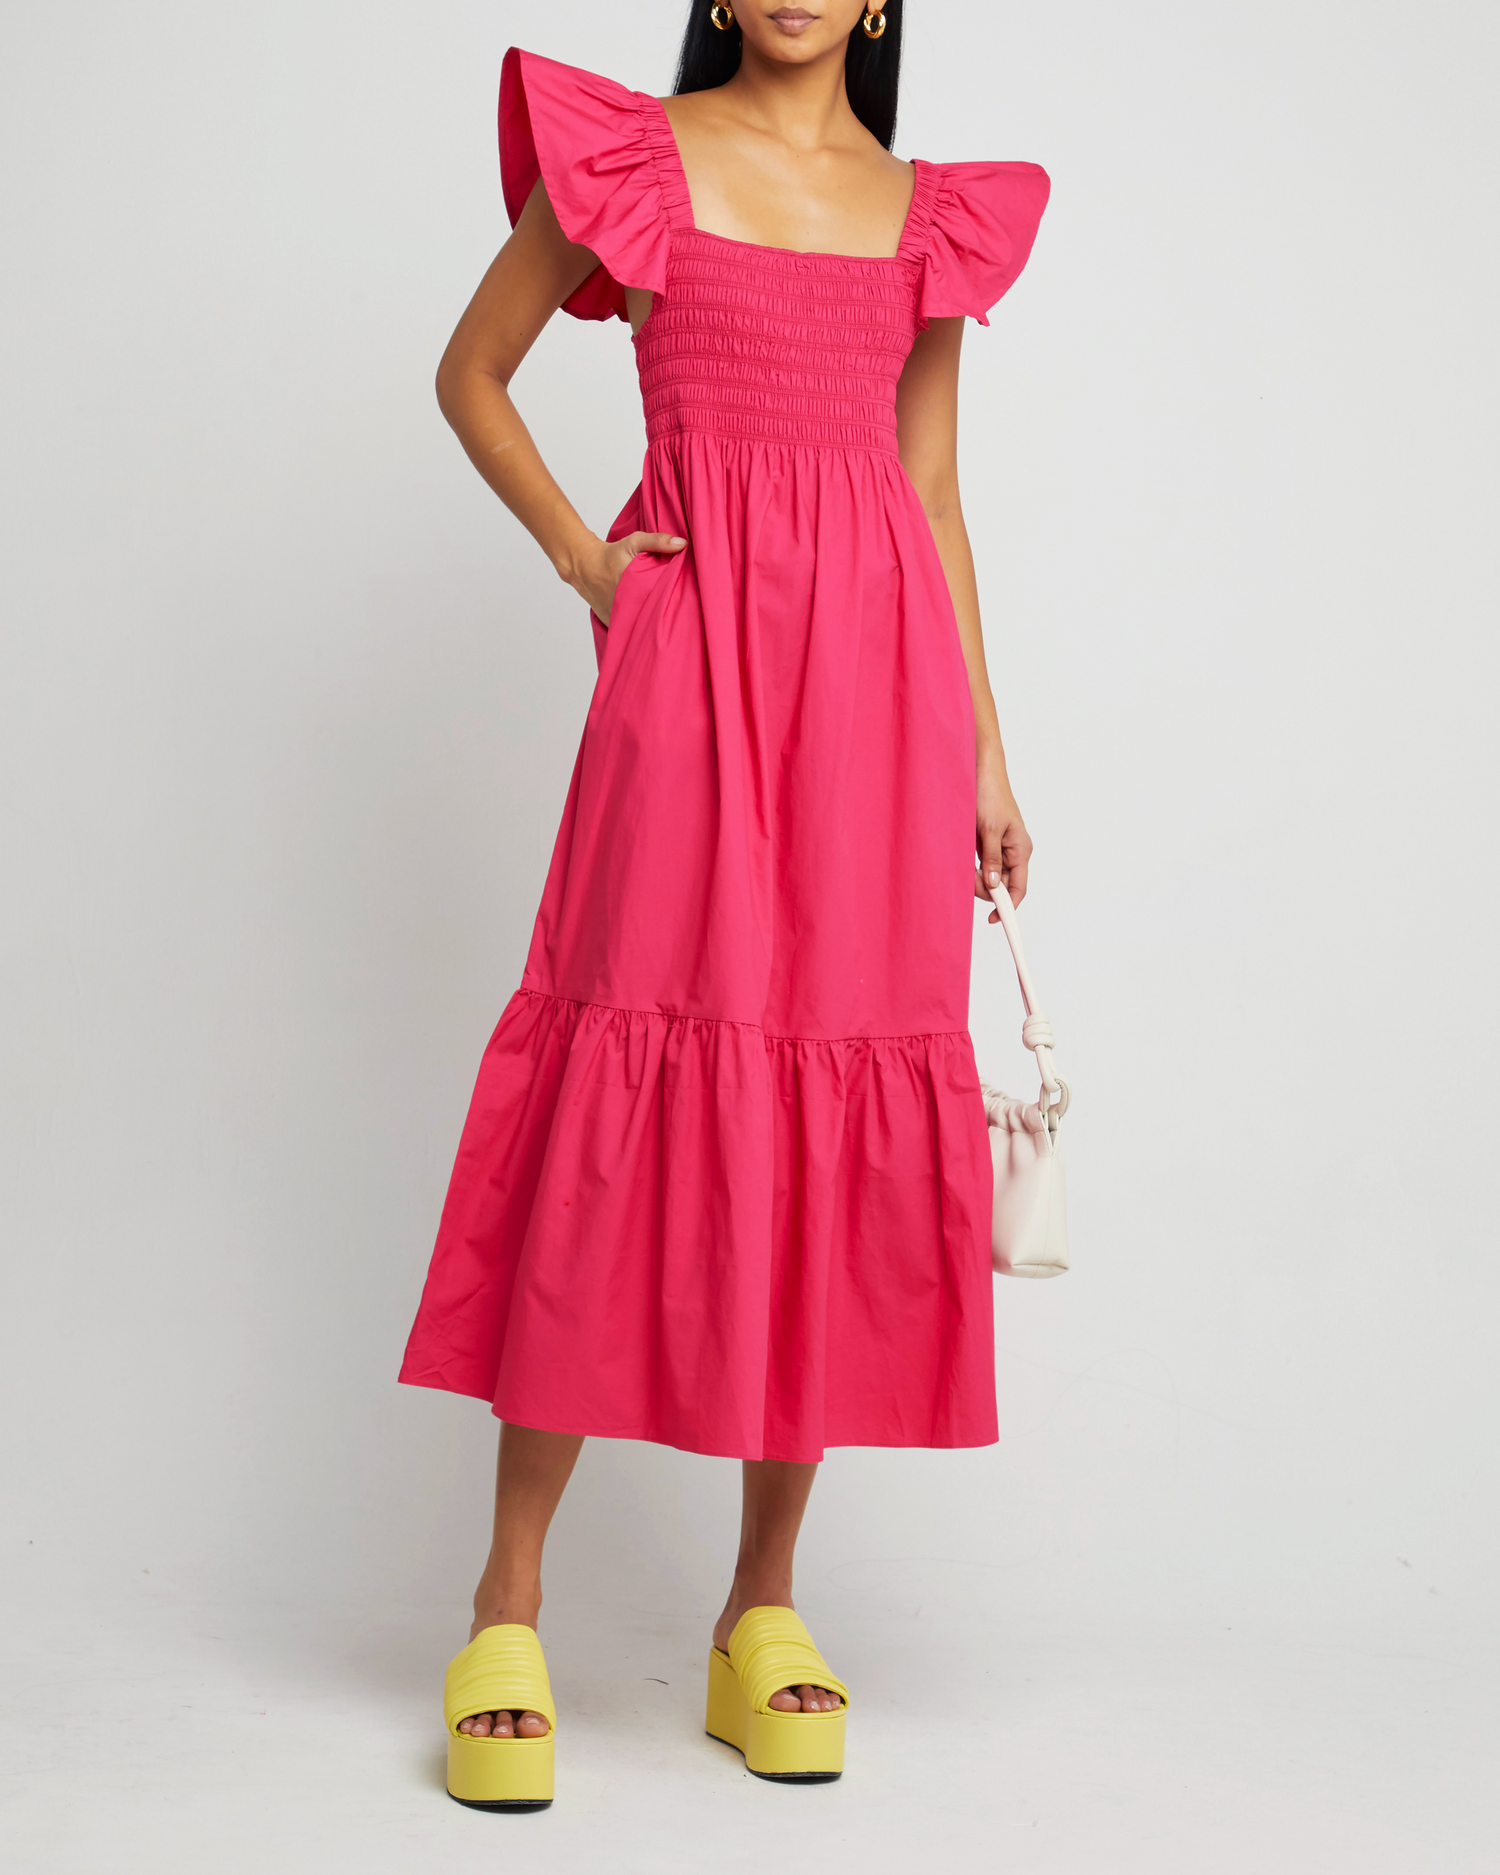 Fourth image of Tuscany Dress, a pink maxi dress, smocked bodice, ruffled cap sleeves, pockets